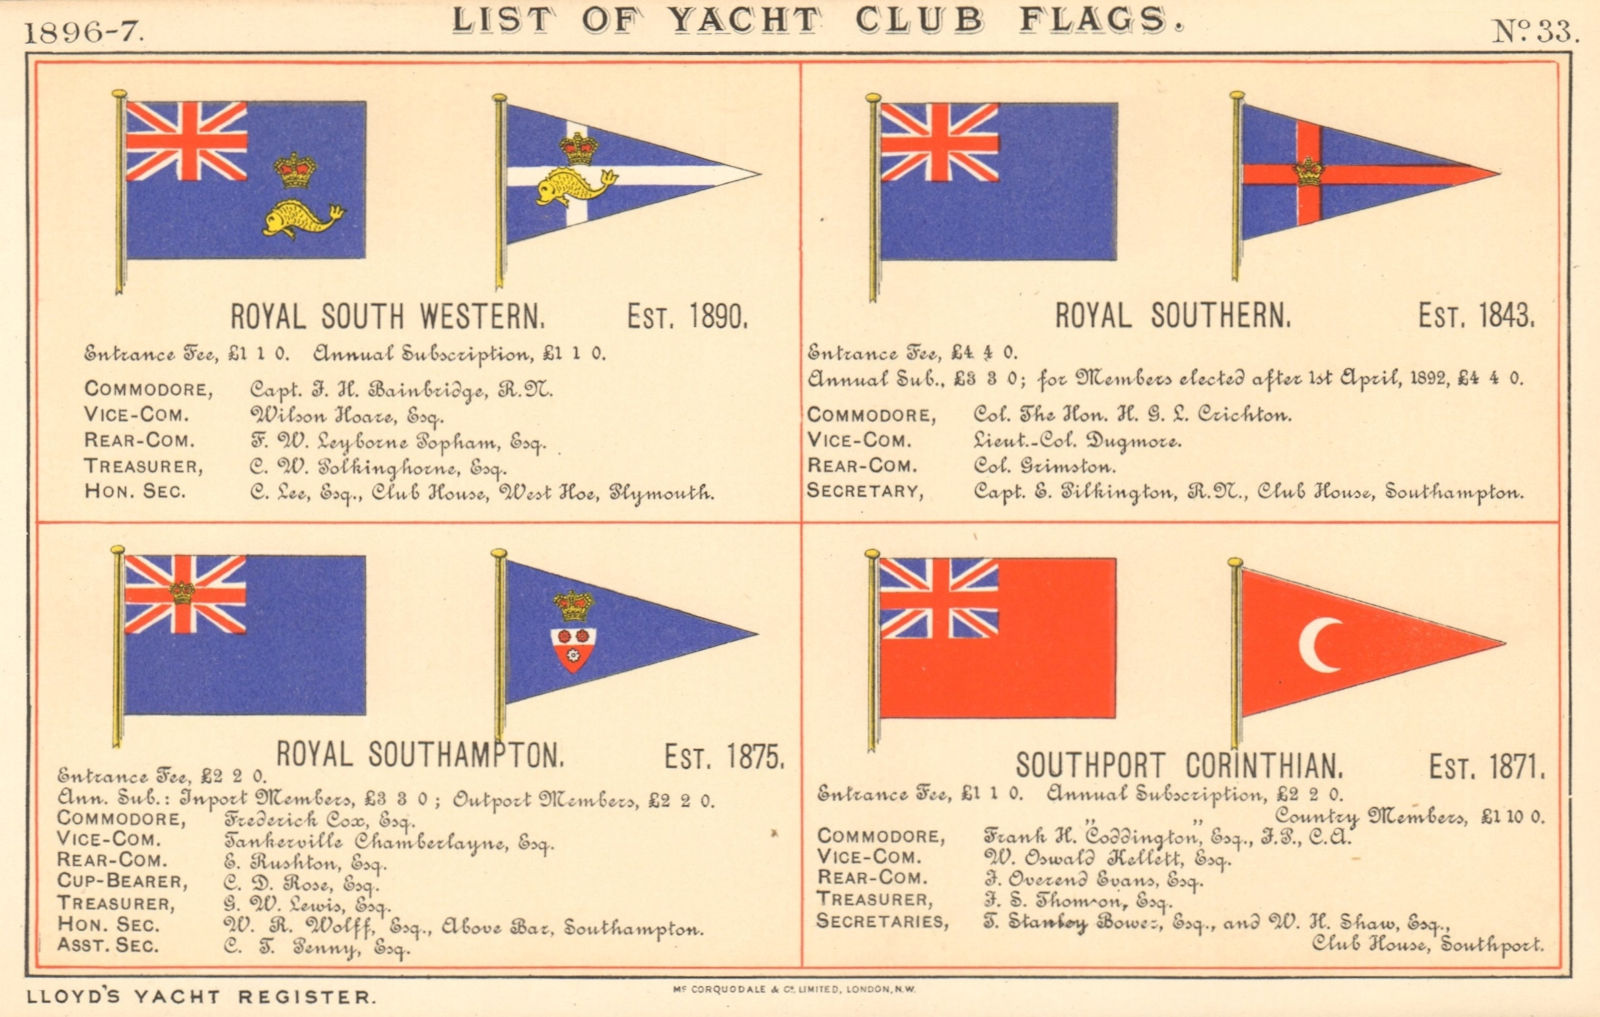 ROYAL YACHT & SAILING CLUB FLAGS. Southern Southampton Southport Corinthian 1896